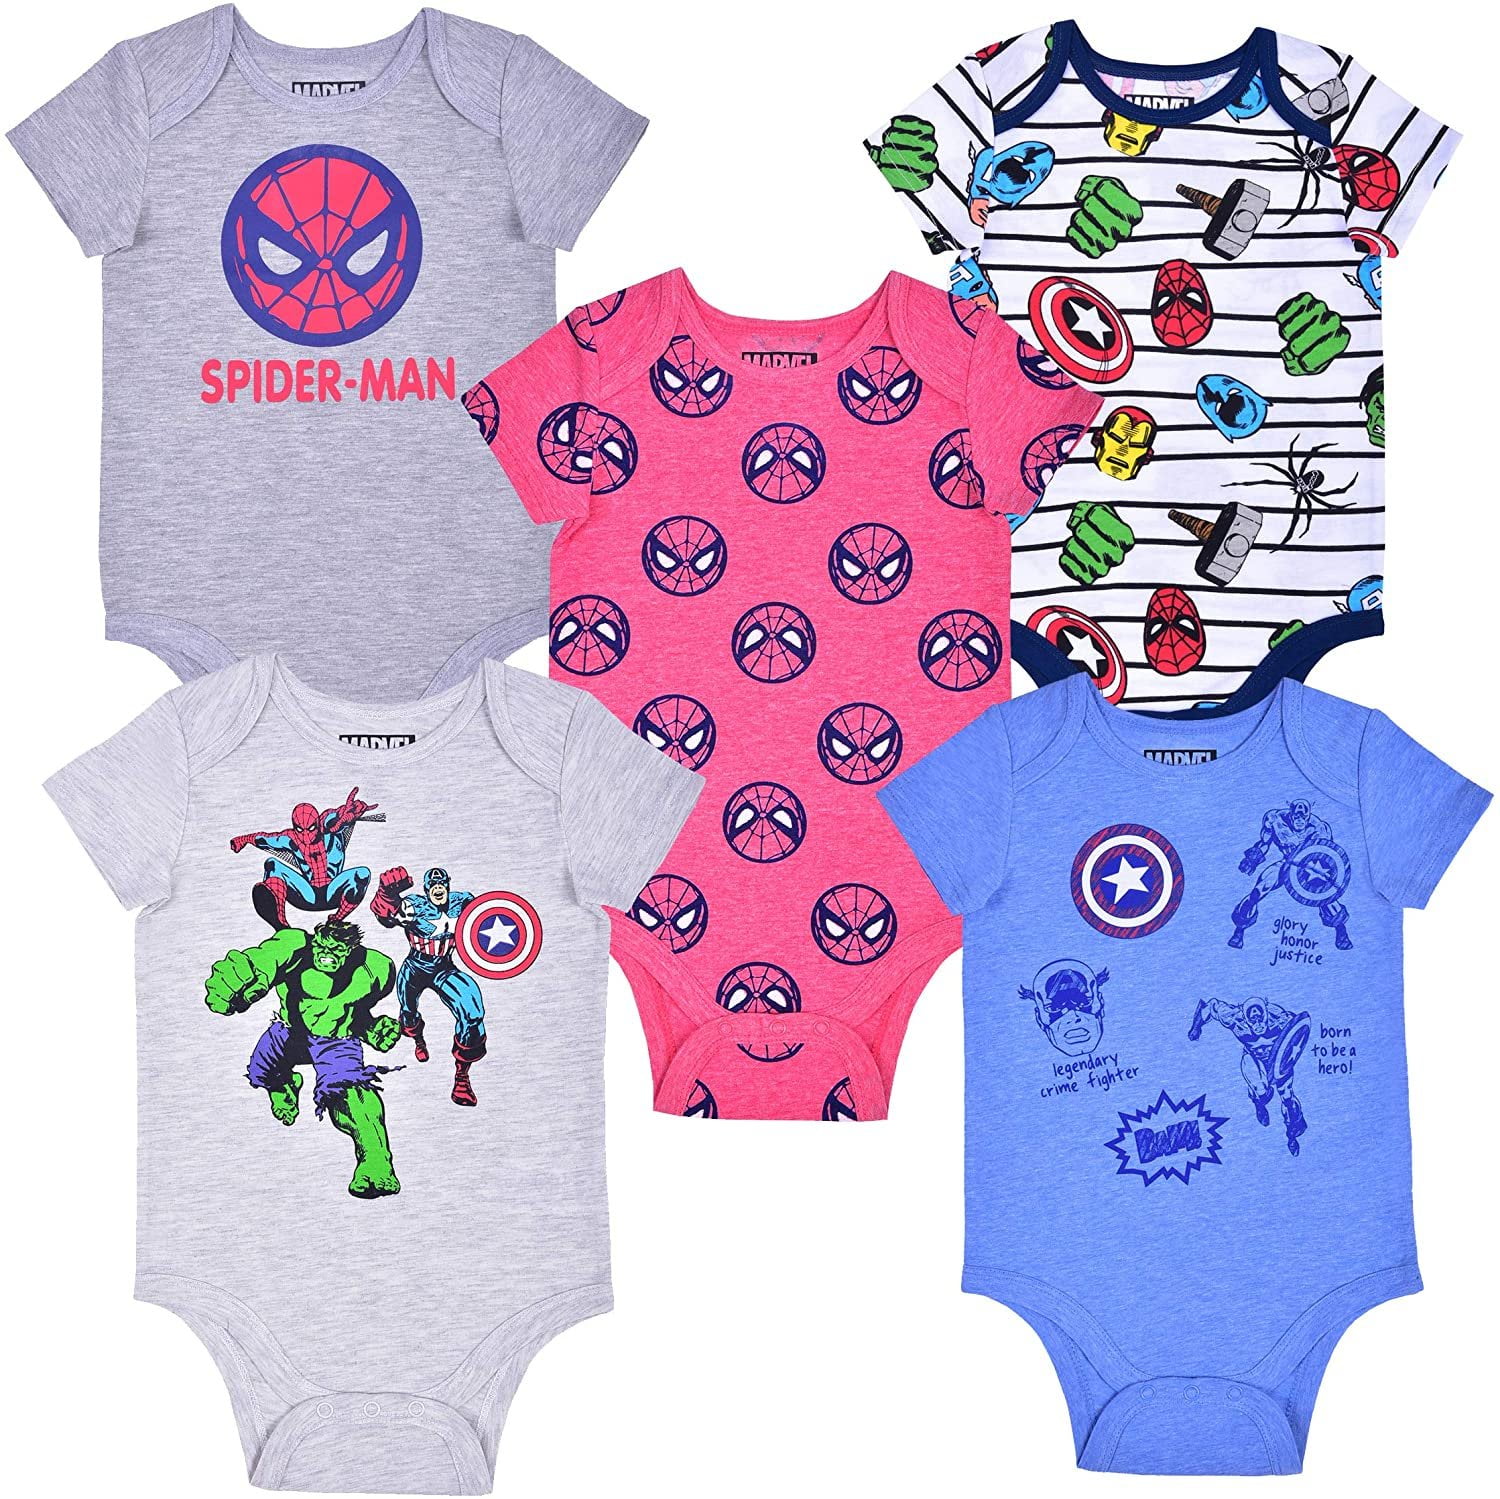 Marvel The Avengers Baby Boys Sleepsuits Babygrows 3 Pack Newborn Brand New 